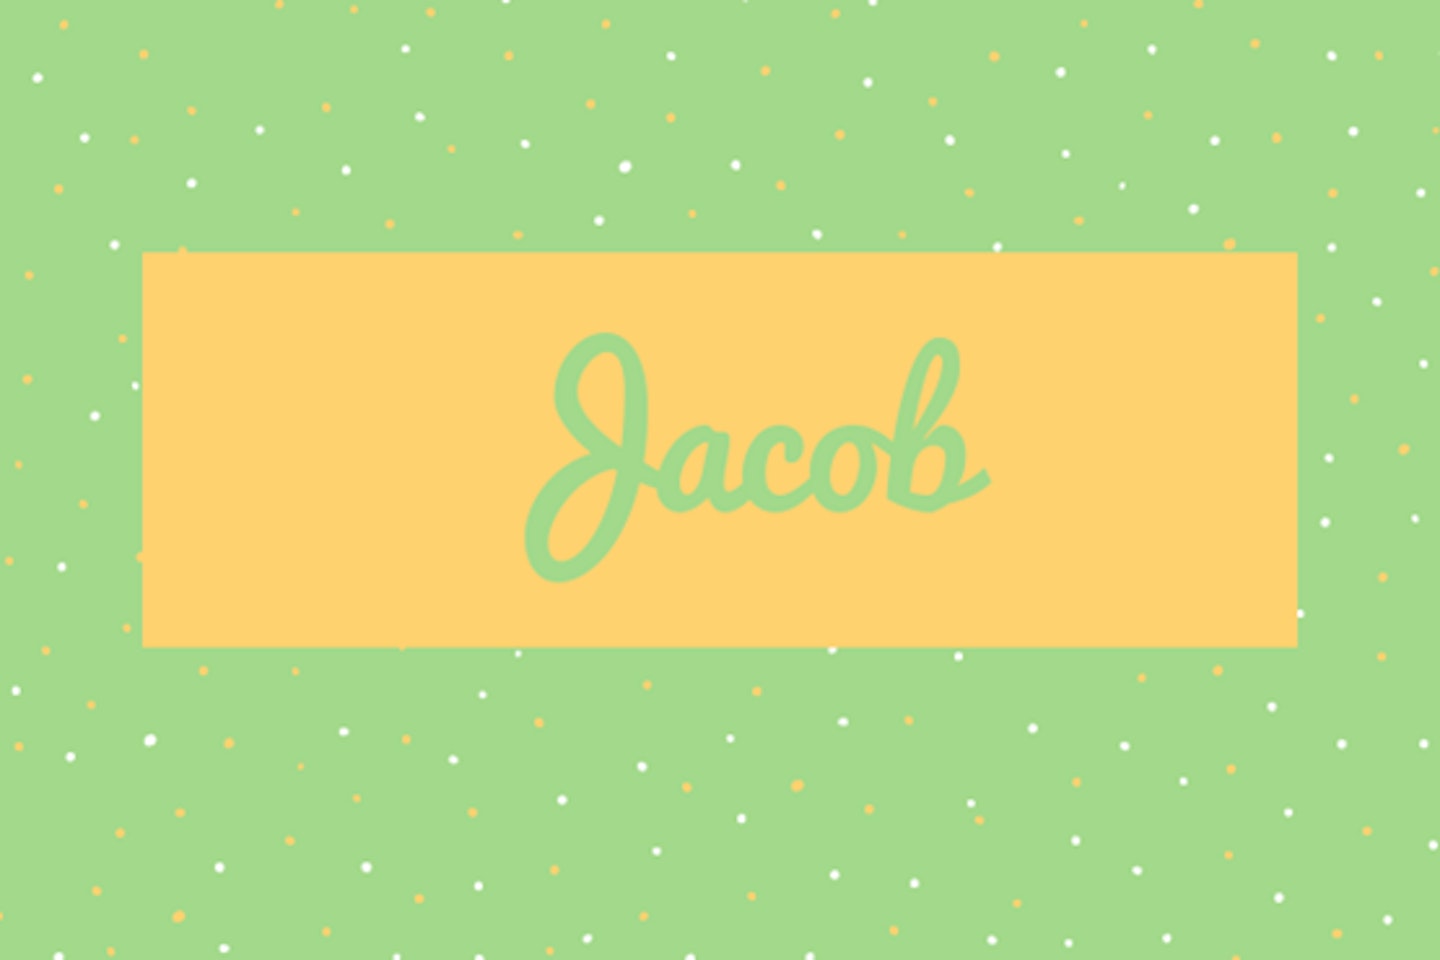 32) Jacob